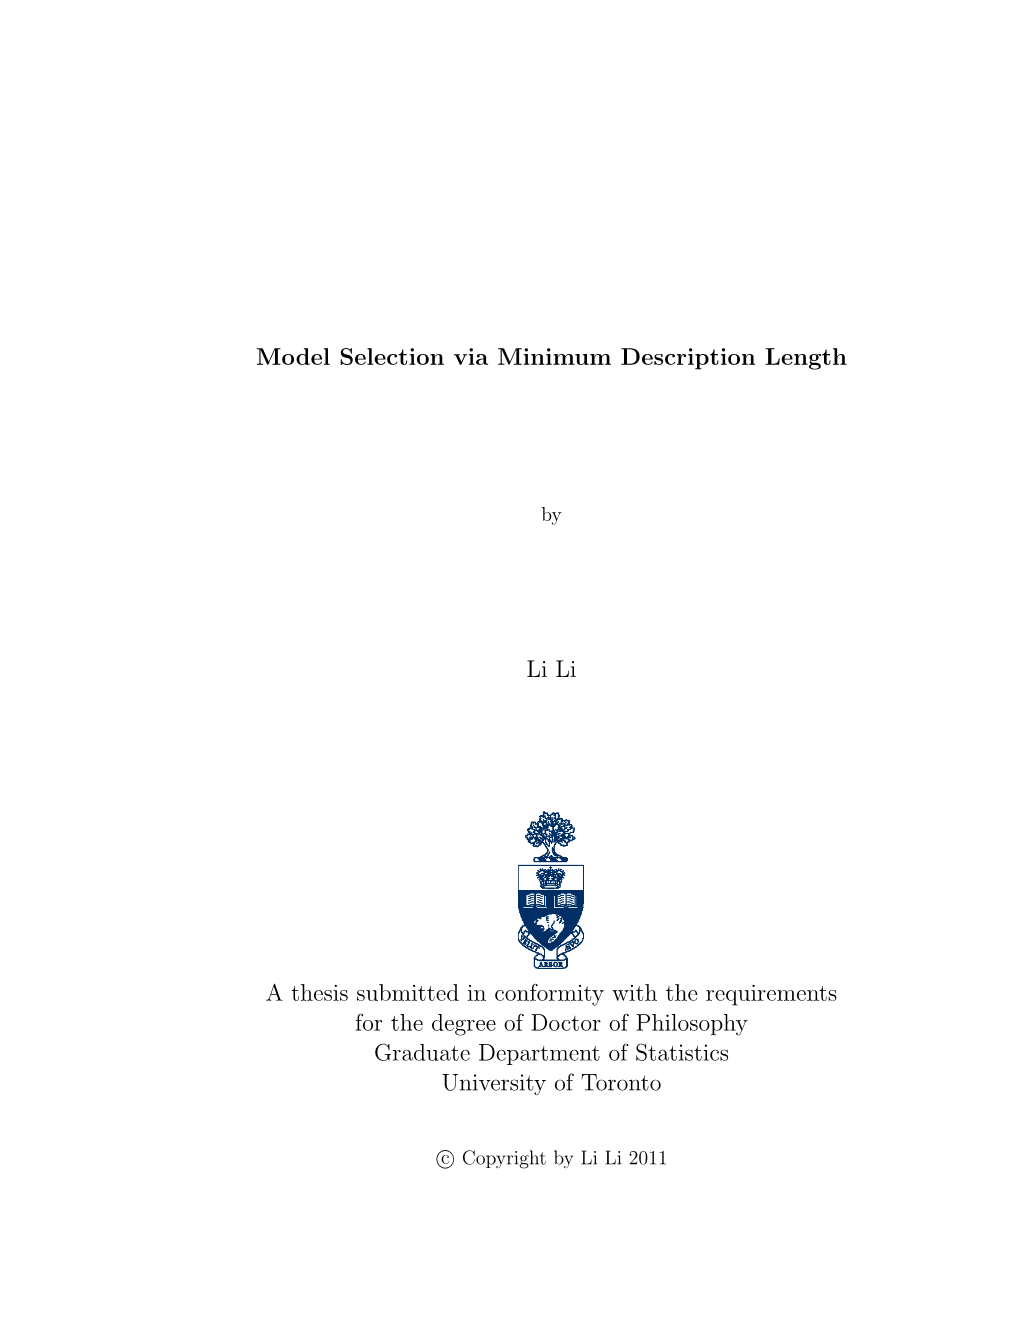 Model Selection Via Minimum Description Length Li Li a Thesis